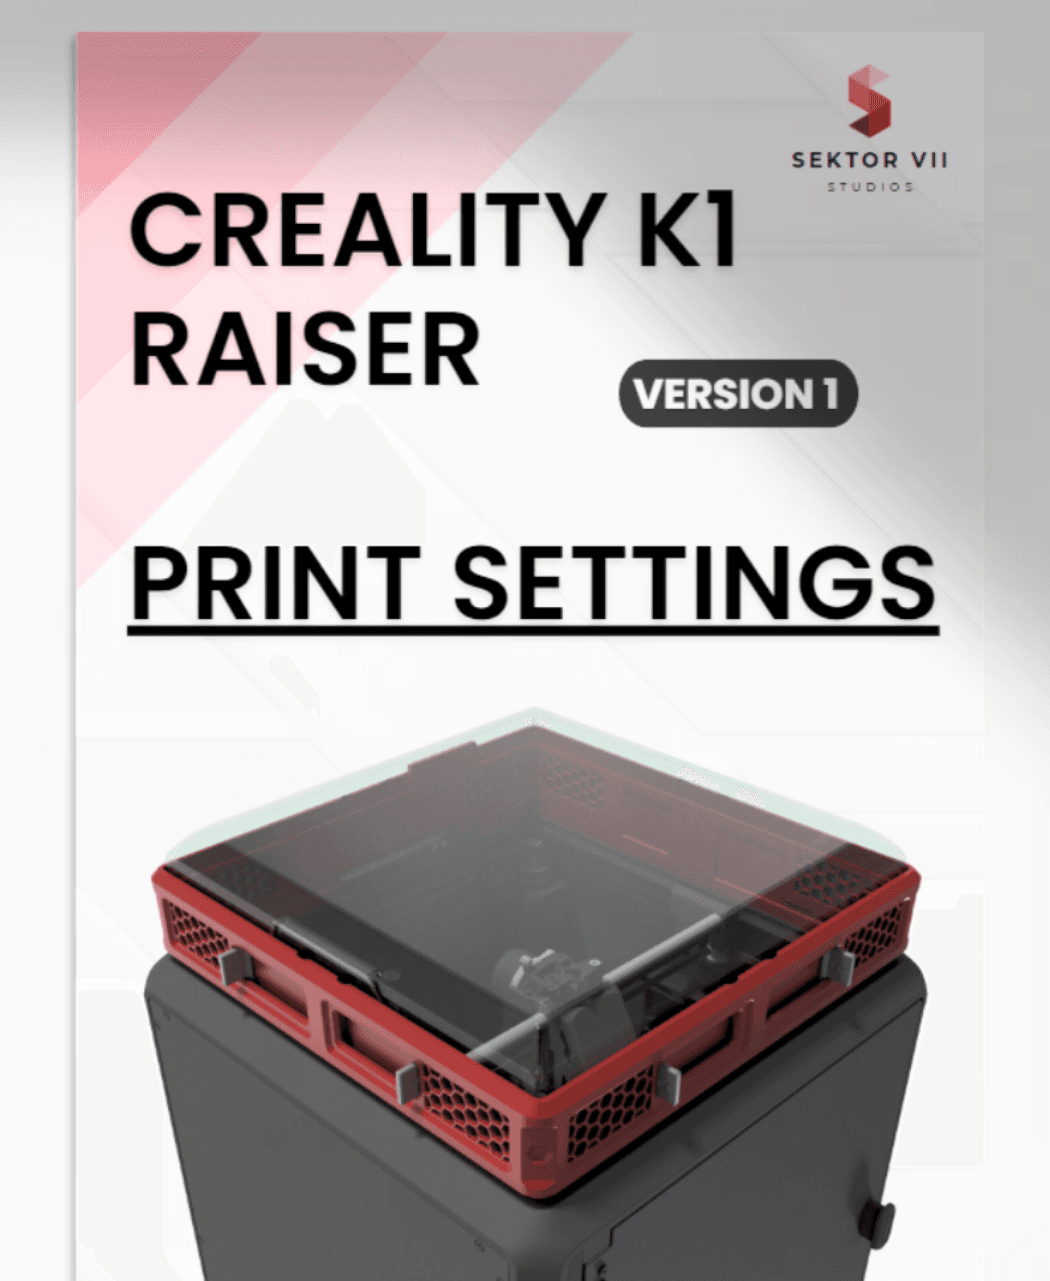 CREALITY K1 & K1C RAISER / DECKEL / TOP COVER / UPGRADE (VERSION 1) 3d model